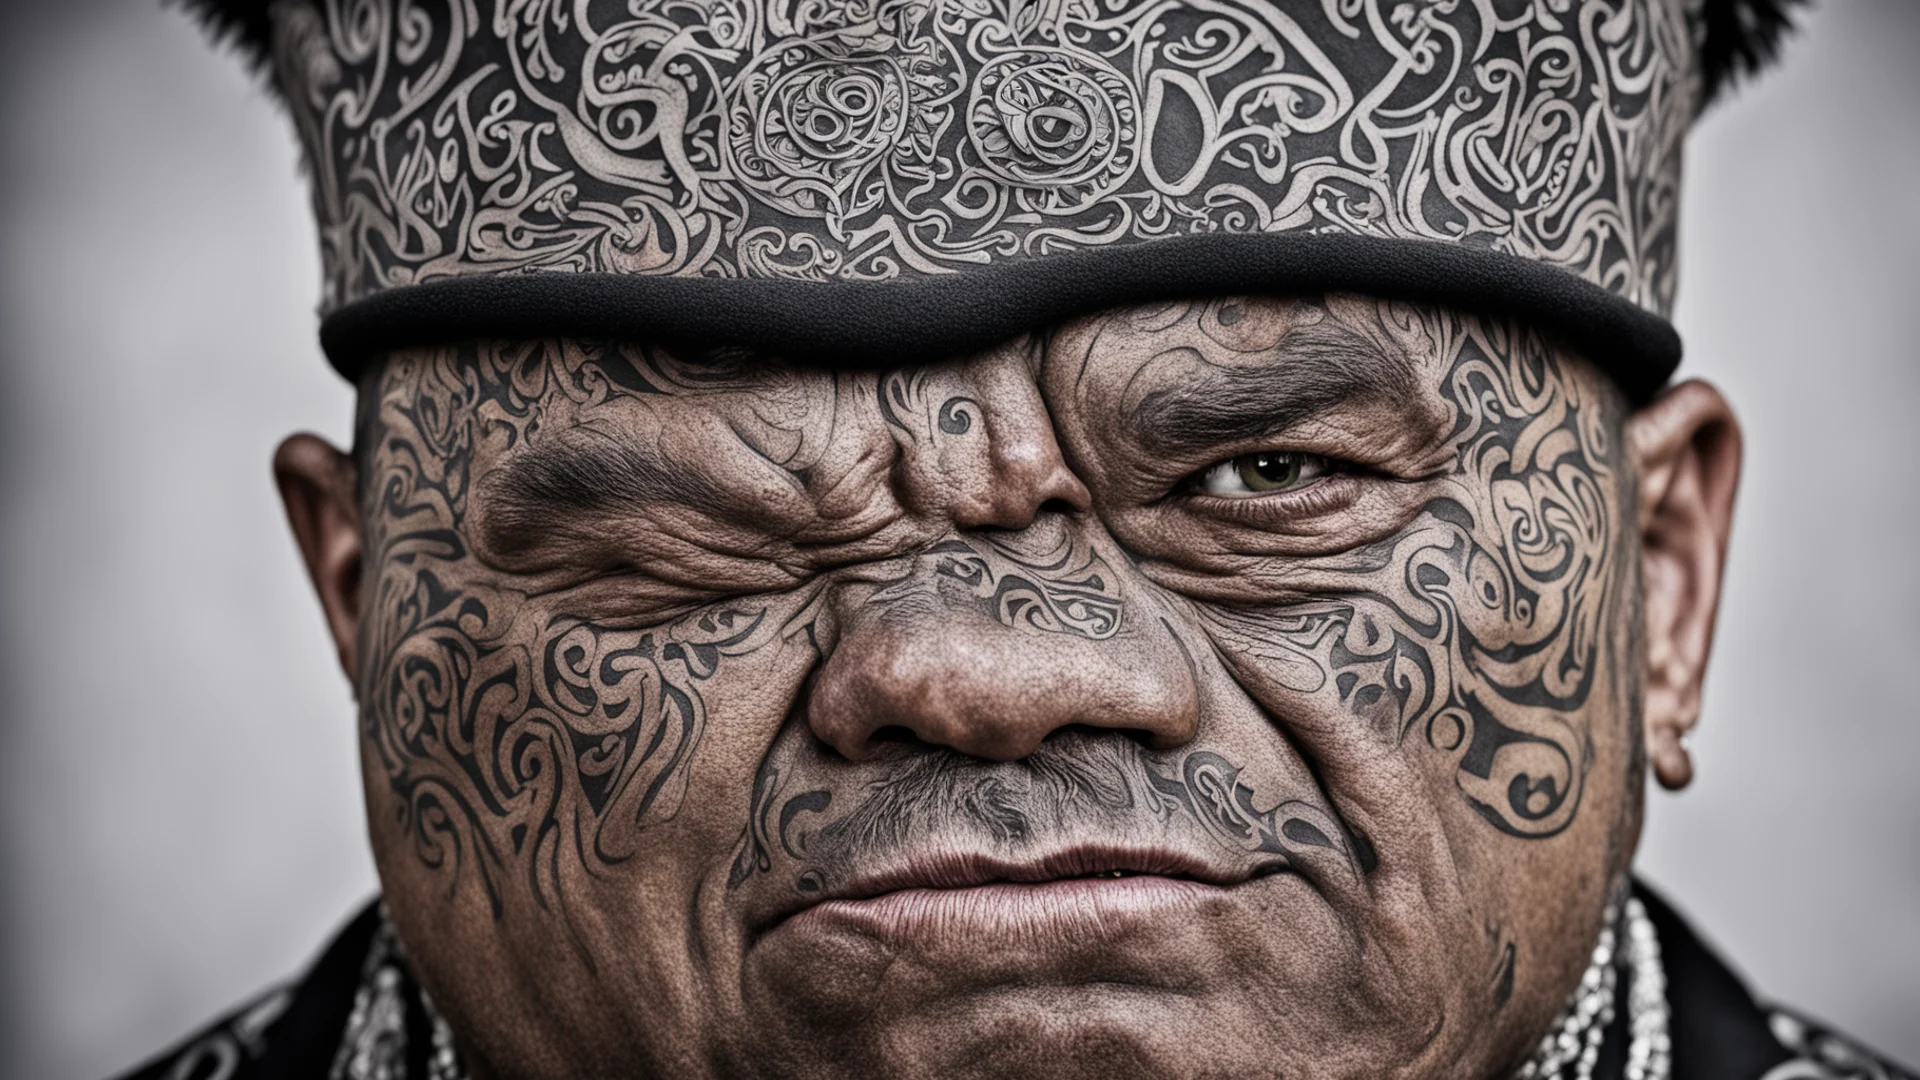 aimaori cheif moko facial tatoos menacing close up face top hat wide